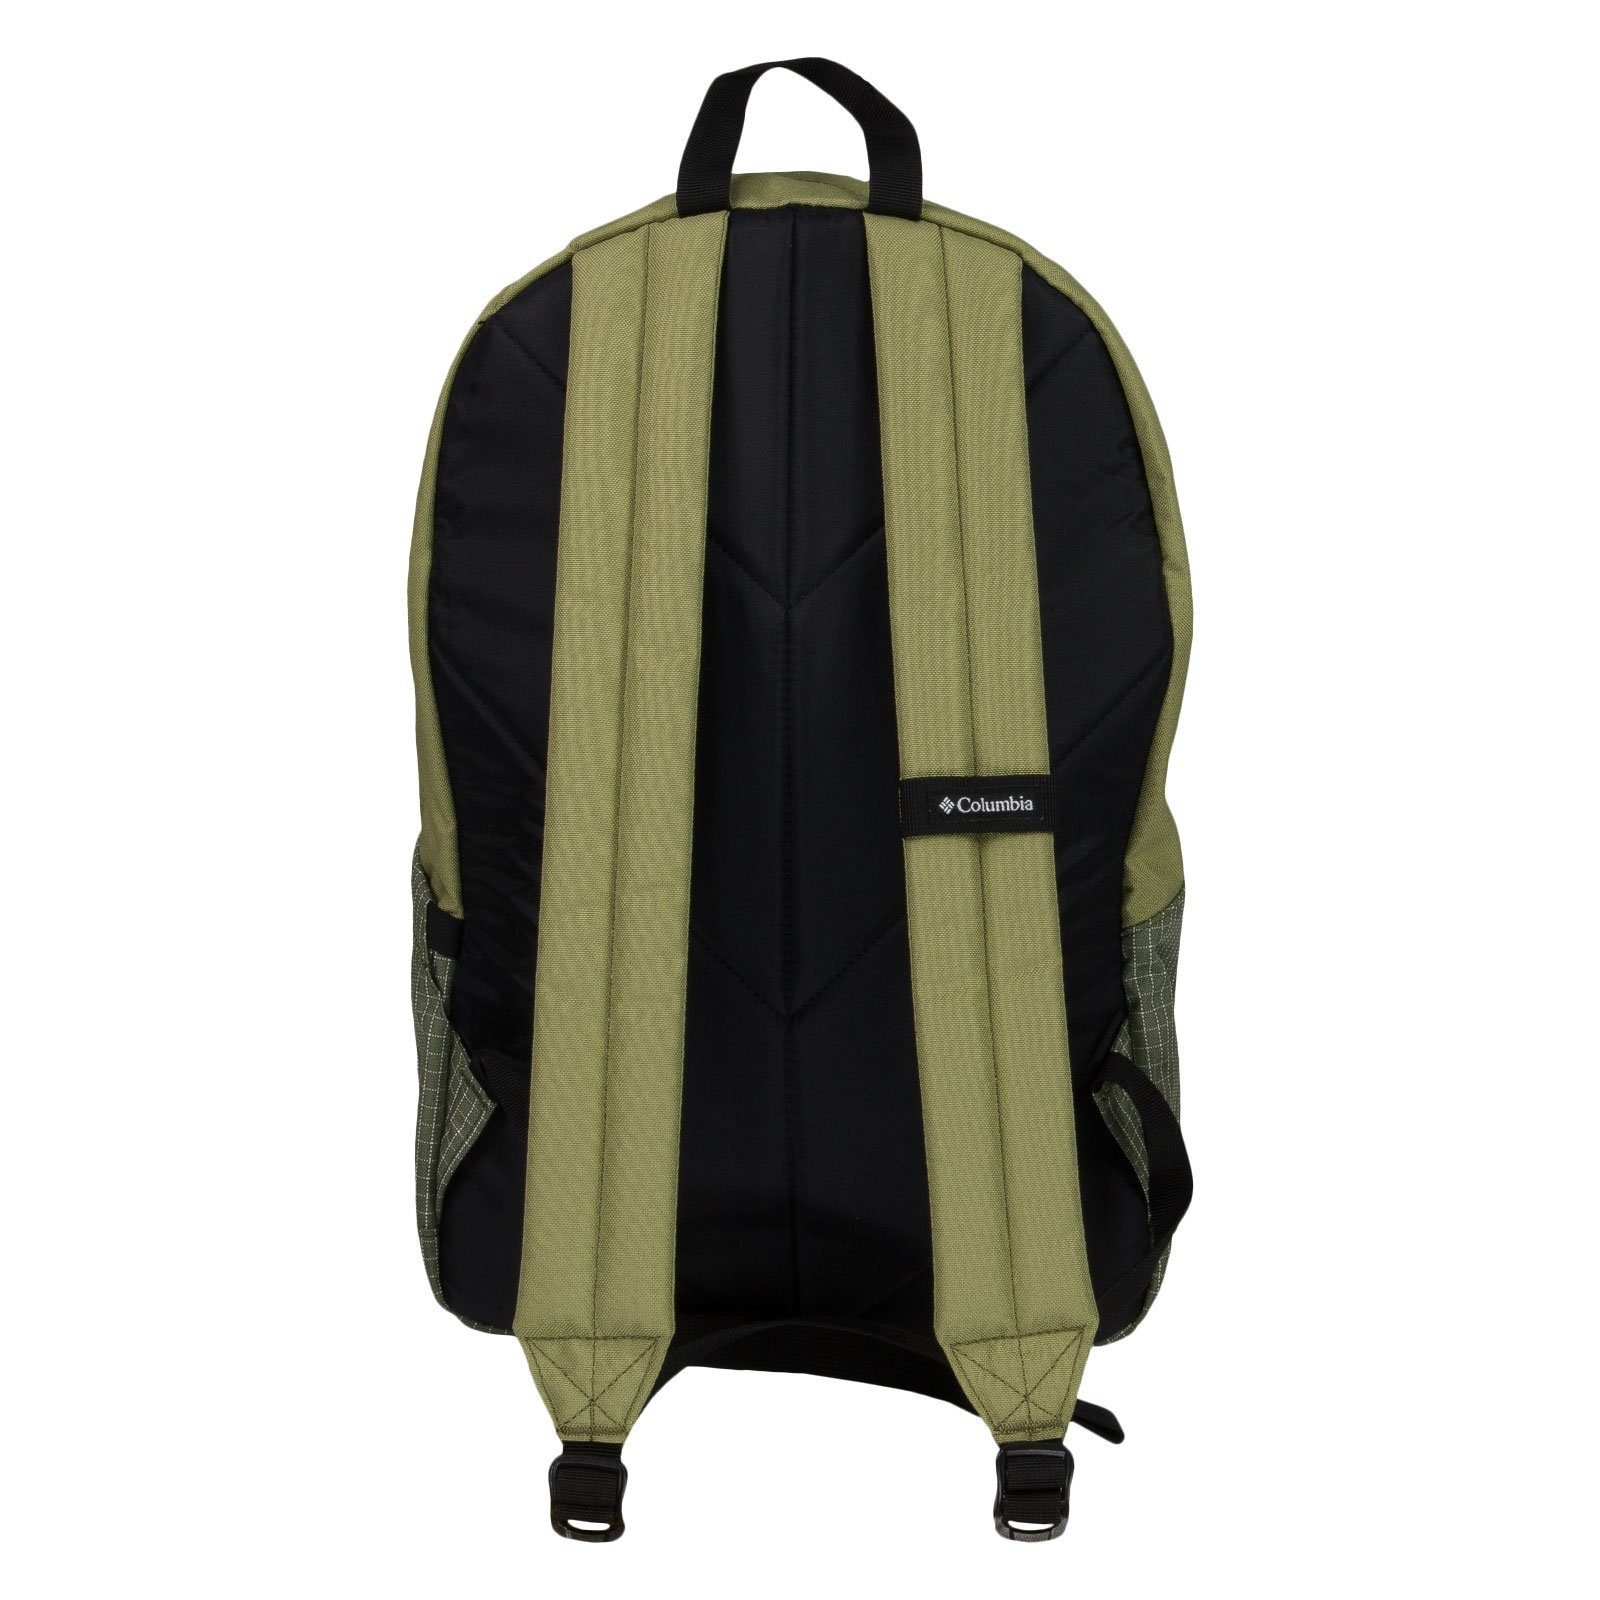 Laptopfach savory Freizeitrucksack Columbia green 327 stone Zigzag™ Backpack, mit / 22L